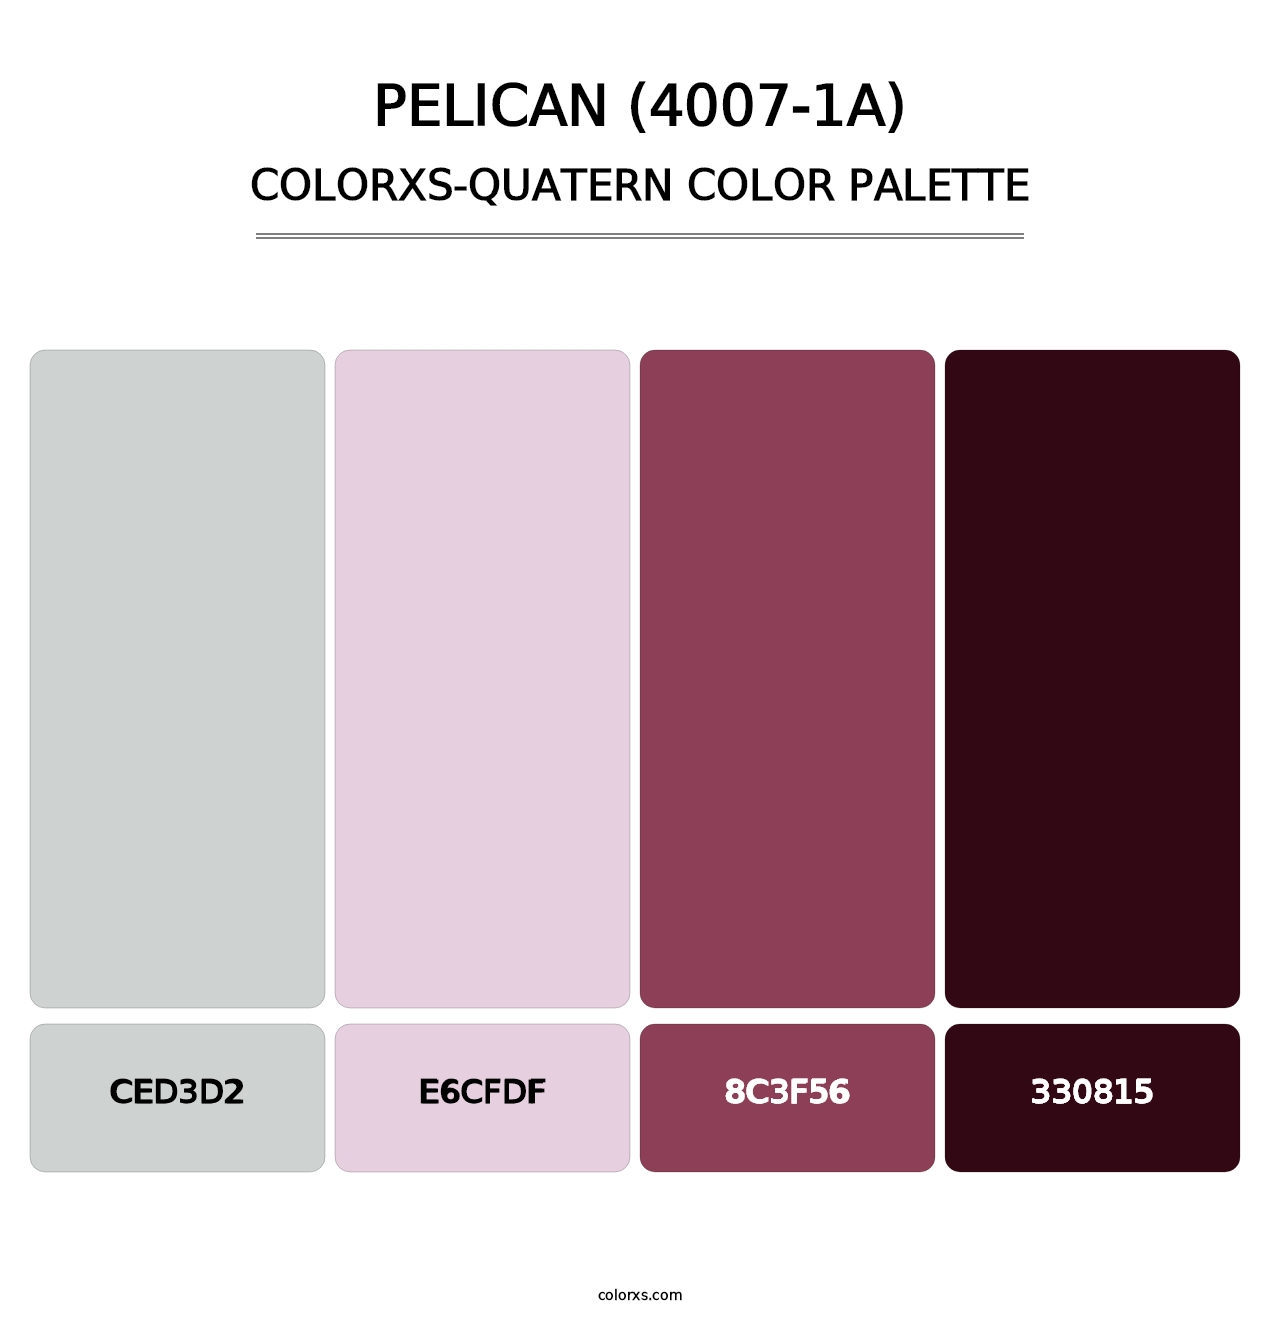 Pelican (4007-1A) - Colorxs Quatern Palette